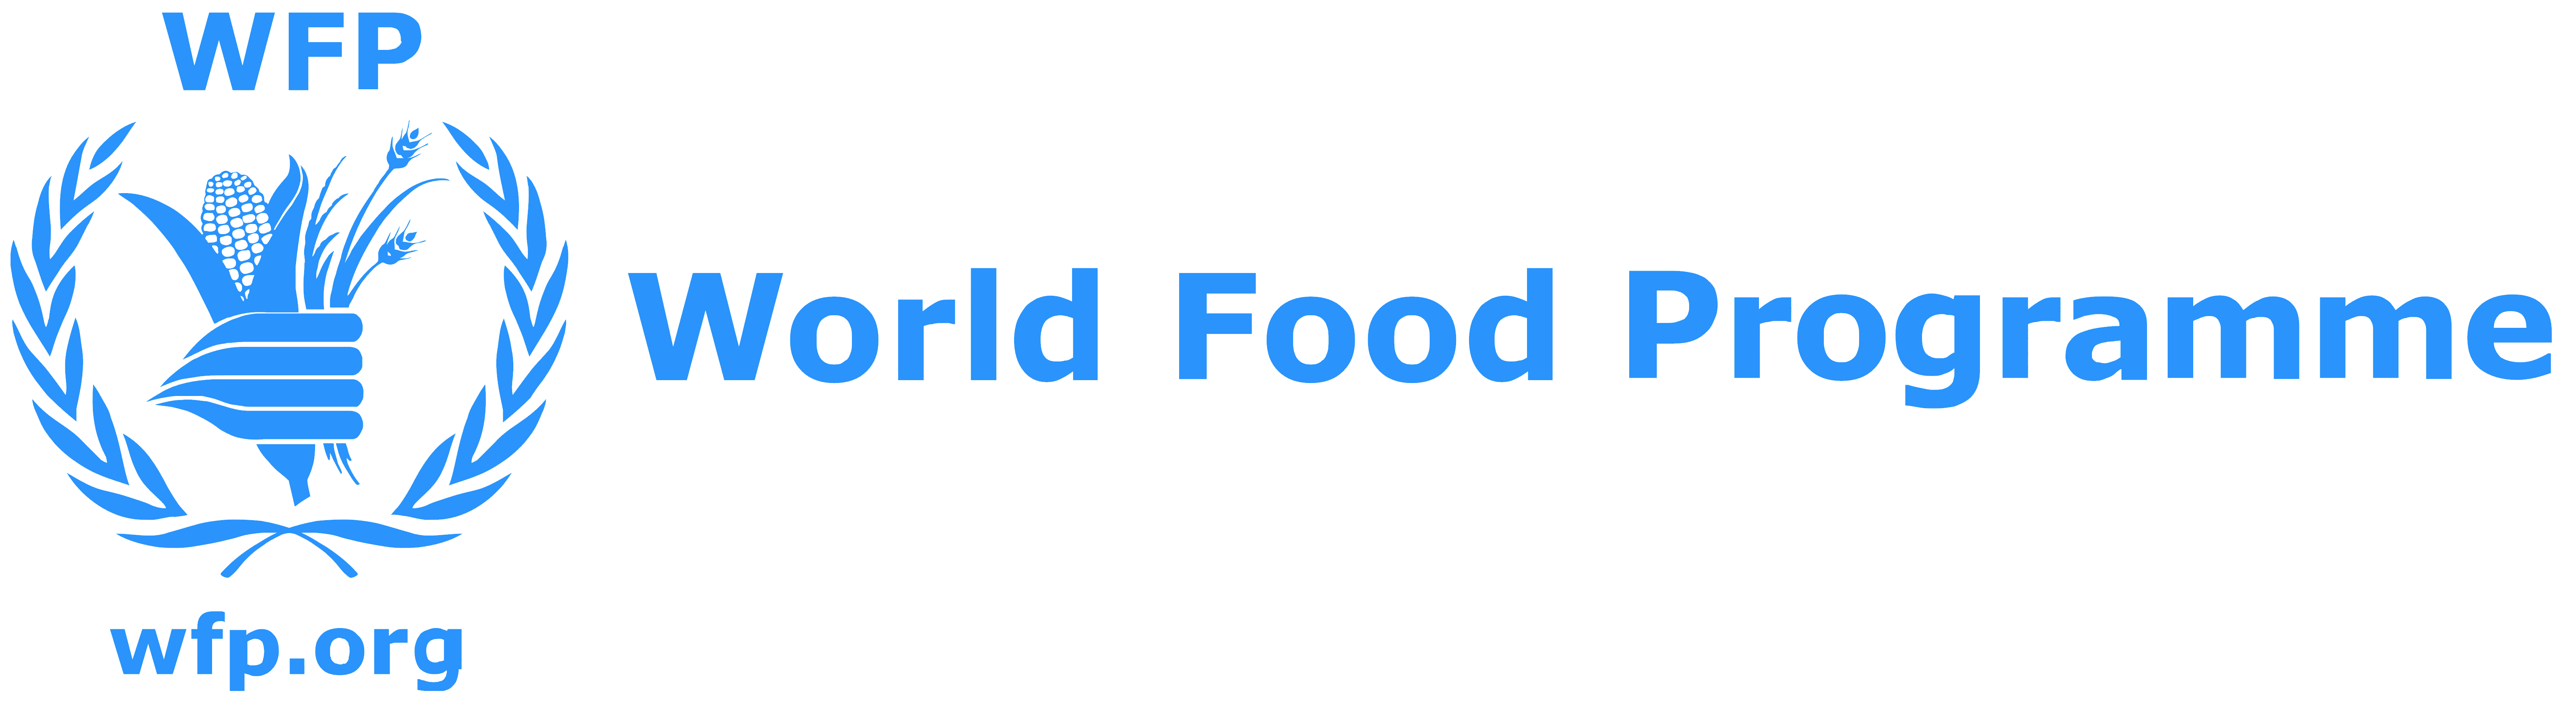 WFP Logo - WFP (World Food Programme) – Logos Download